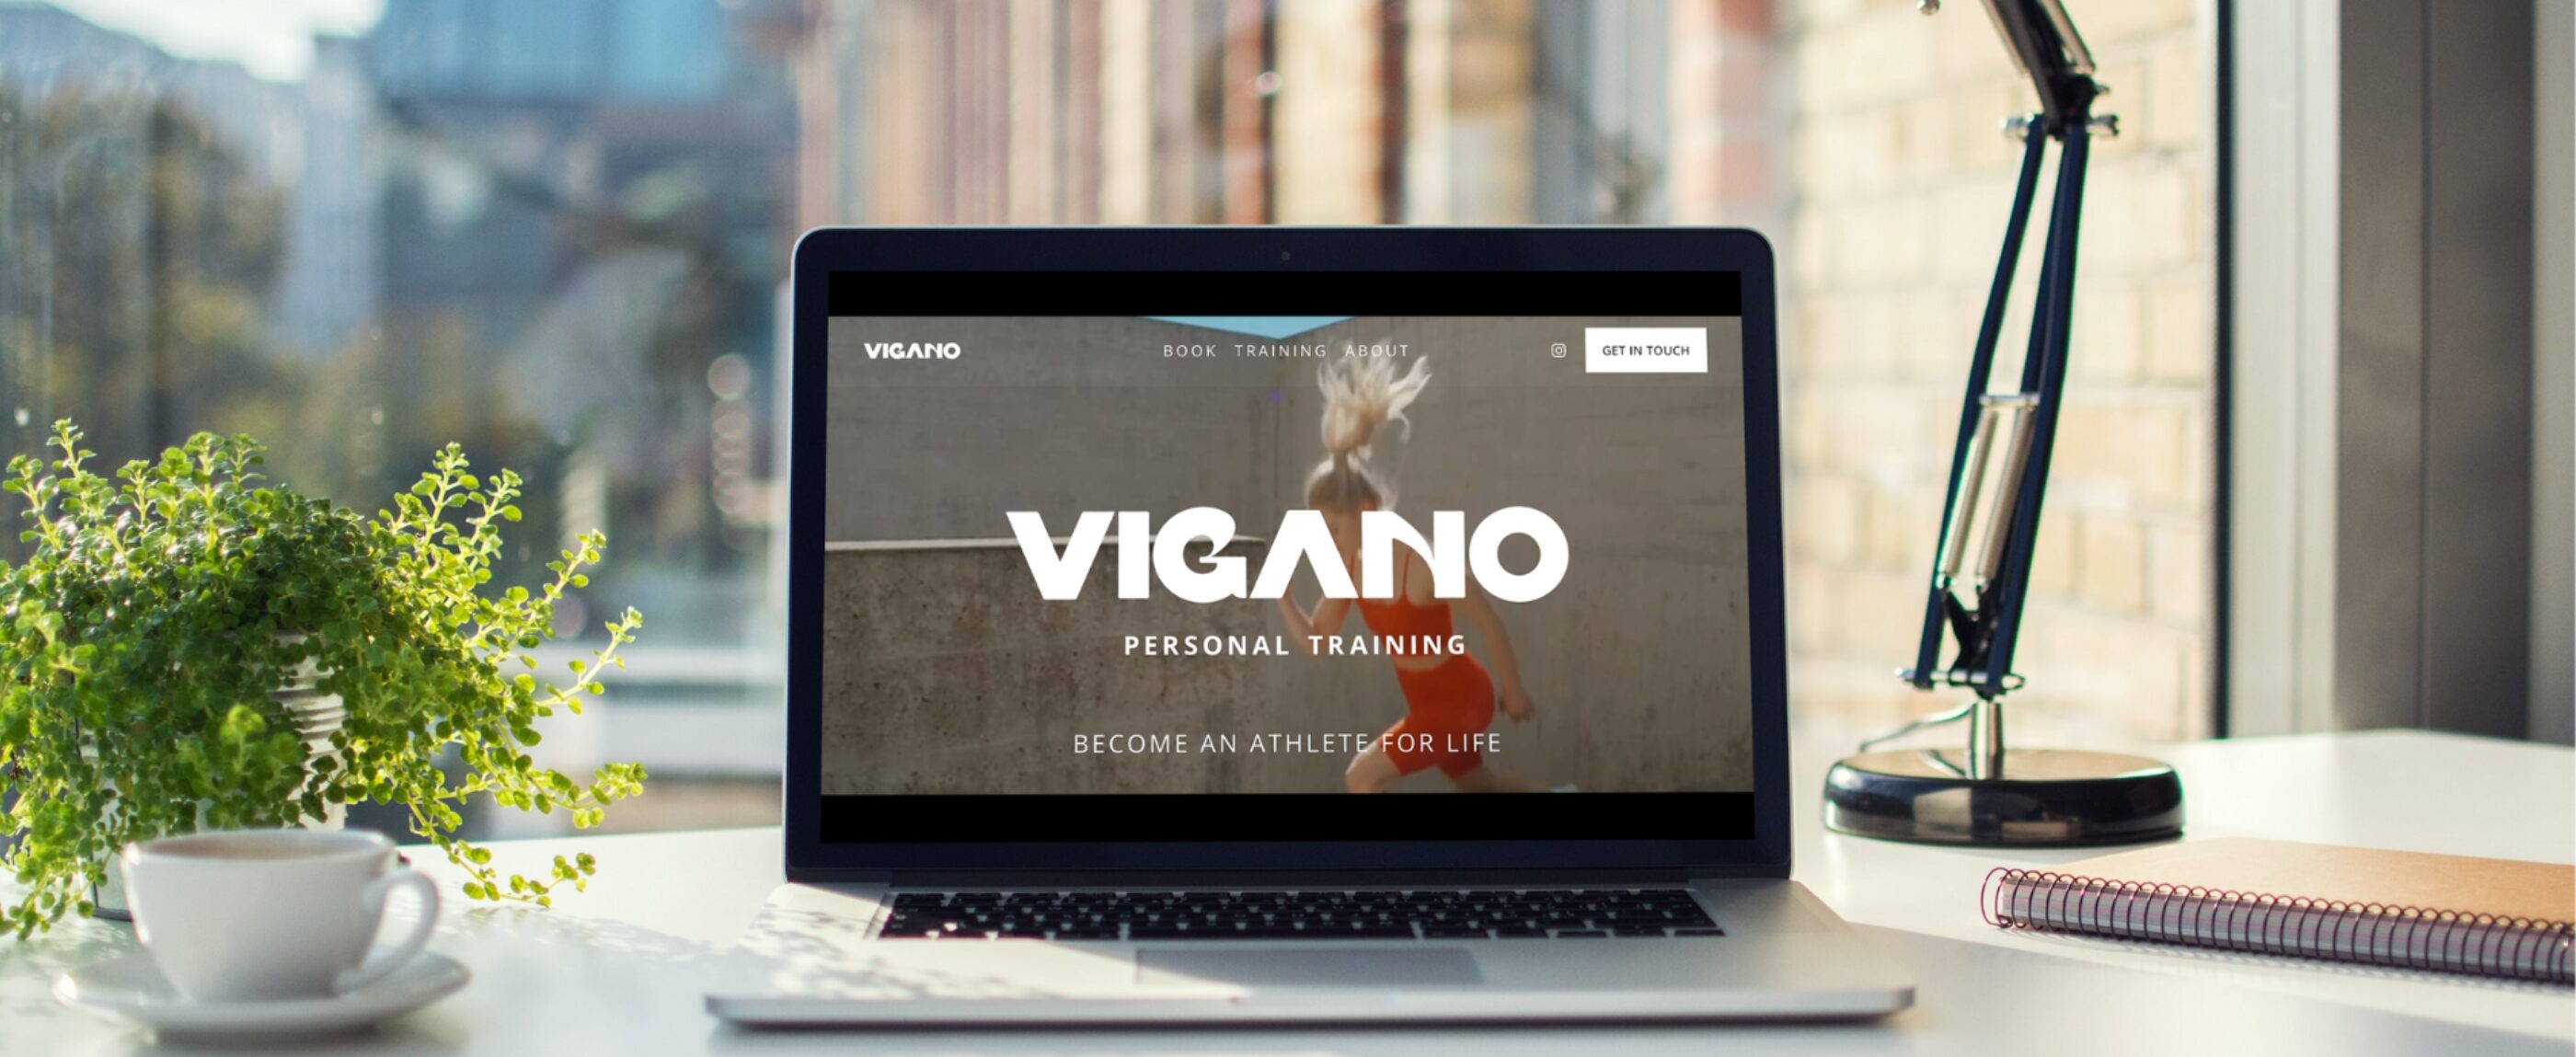 Vigano Website